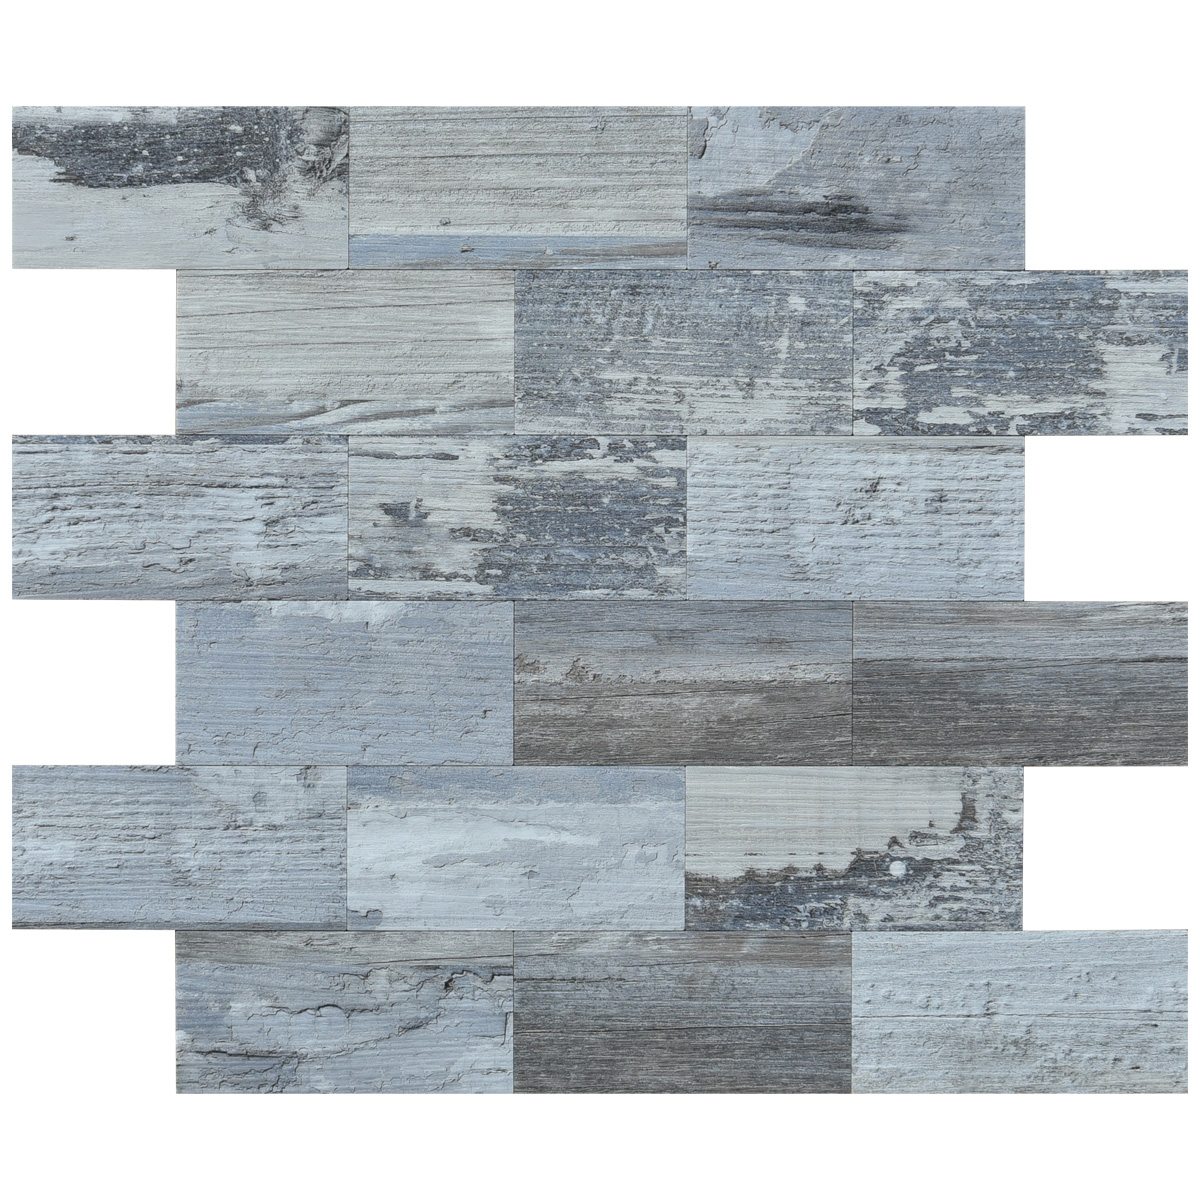 A16511 - Peel and Stick PVC Composite Backsplash Tile,Pack of 10 Tiles 13.5x11.4,Distressed Wood Panel